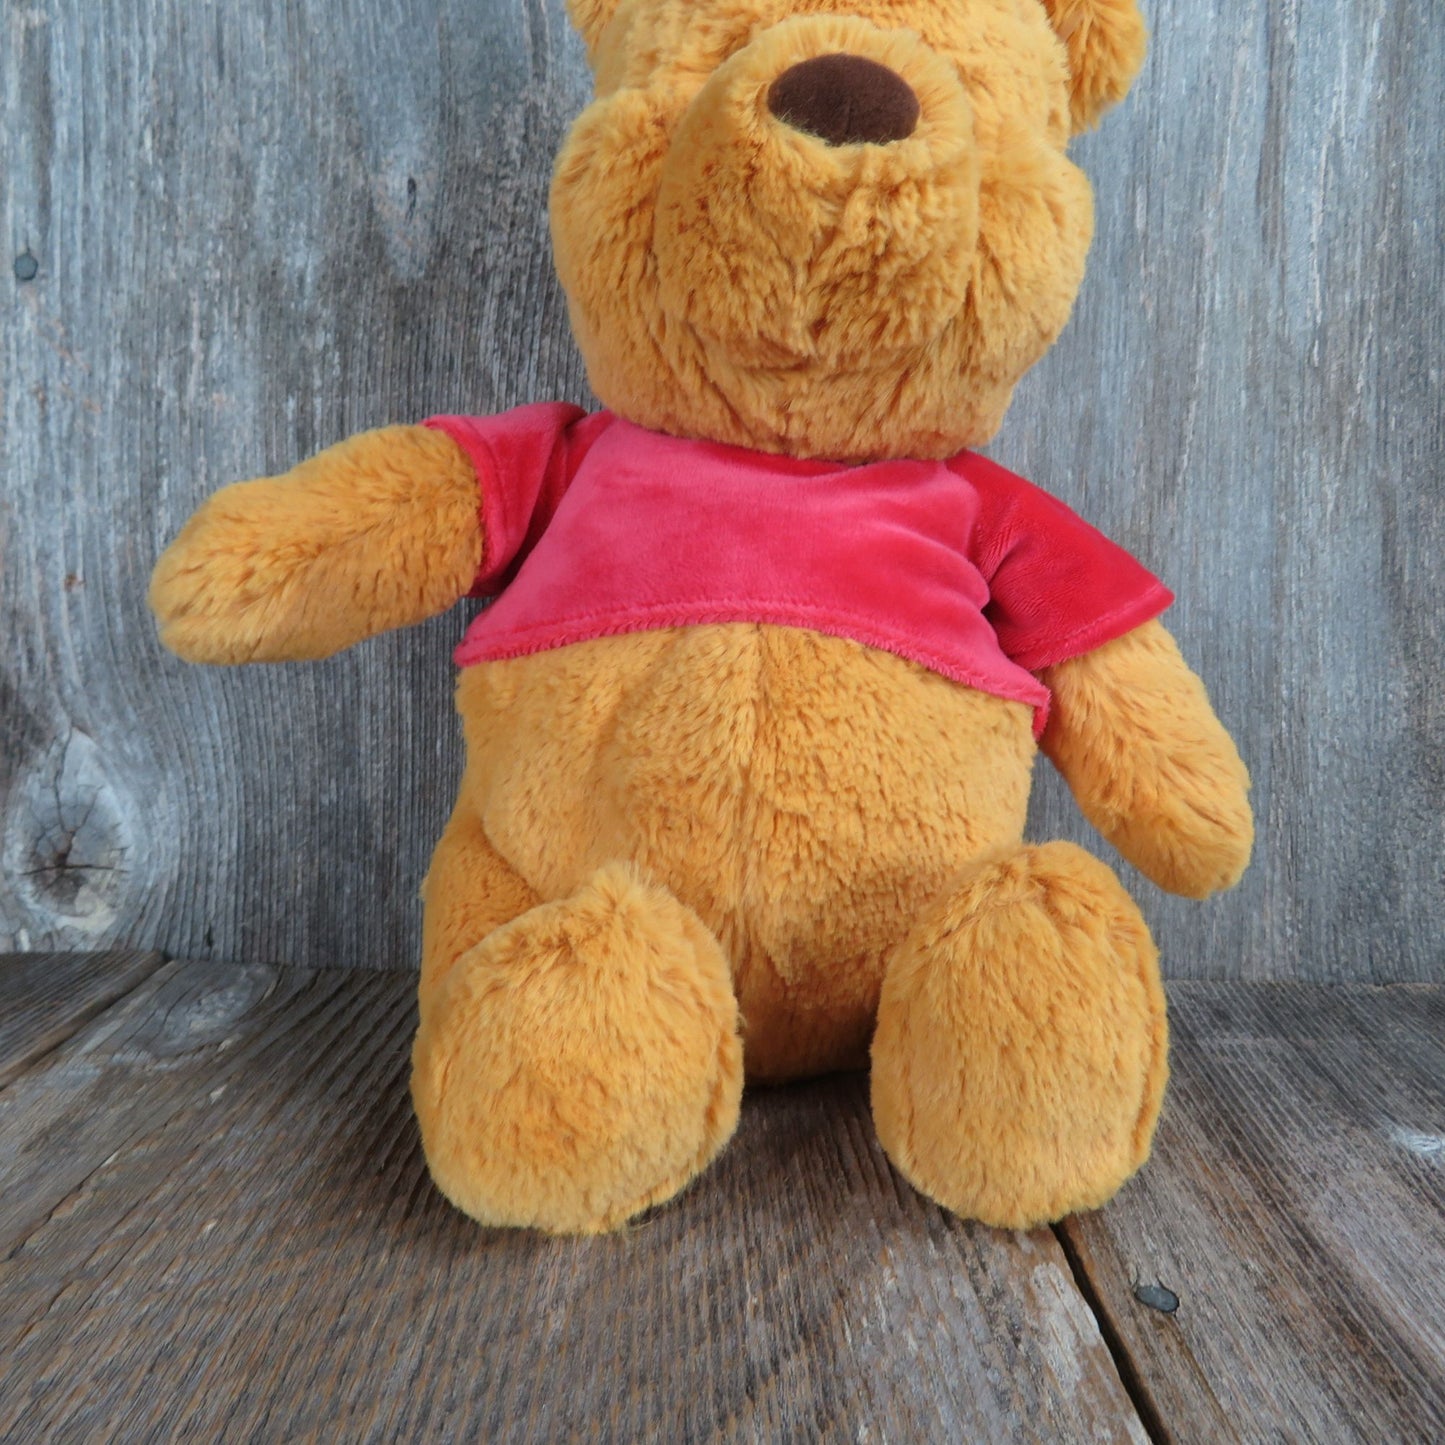 Winnie the Pooh Bear Plush Gund Stuffed Animal Disney Sewn Eyes Orange Red Shirt